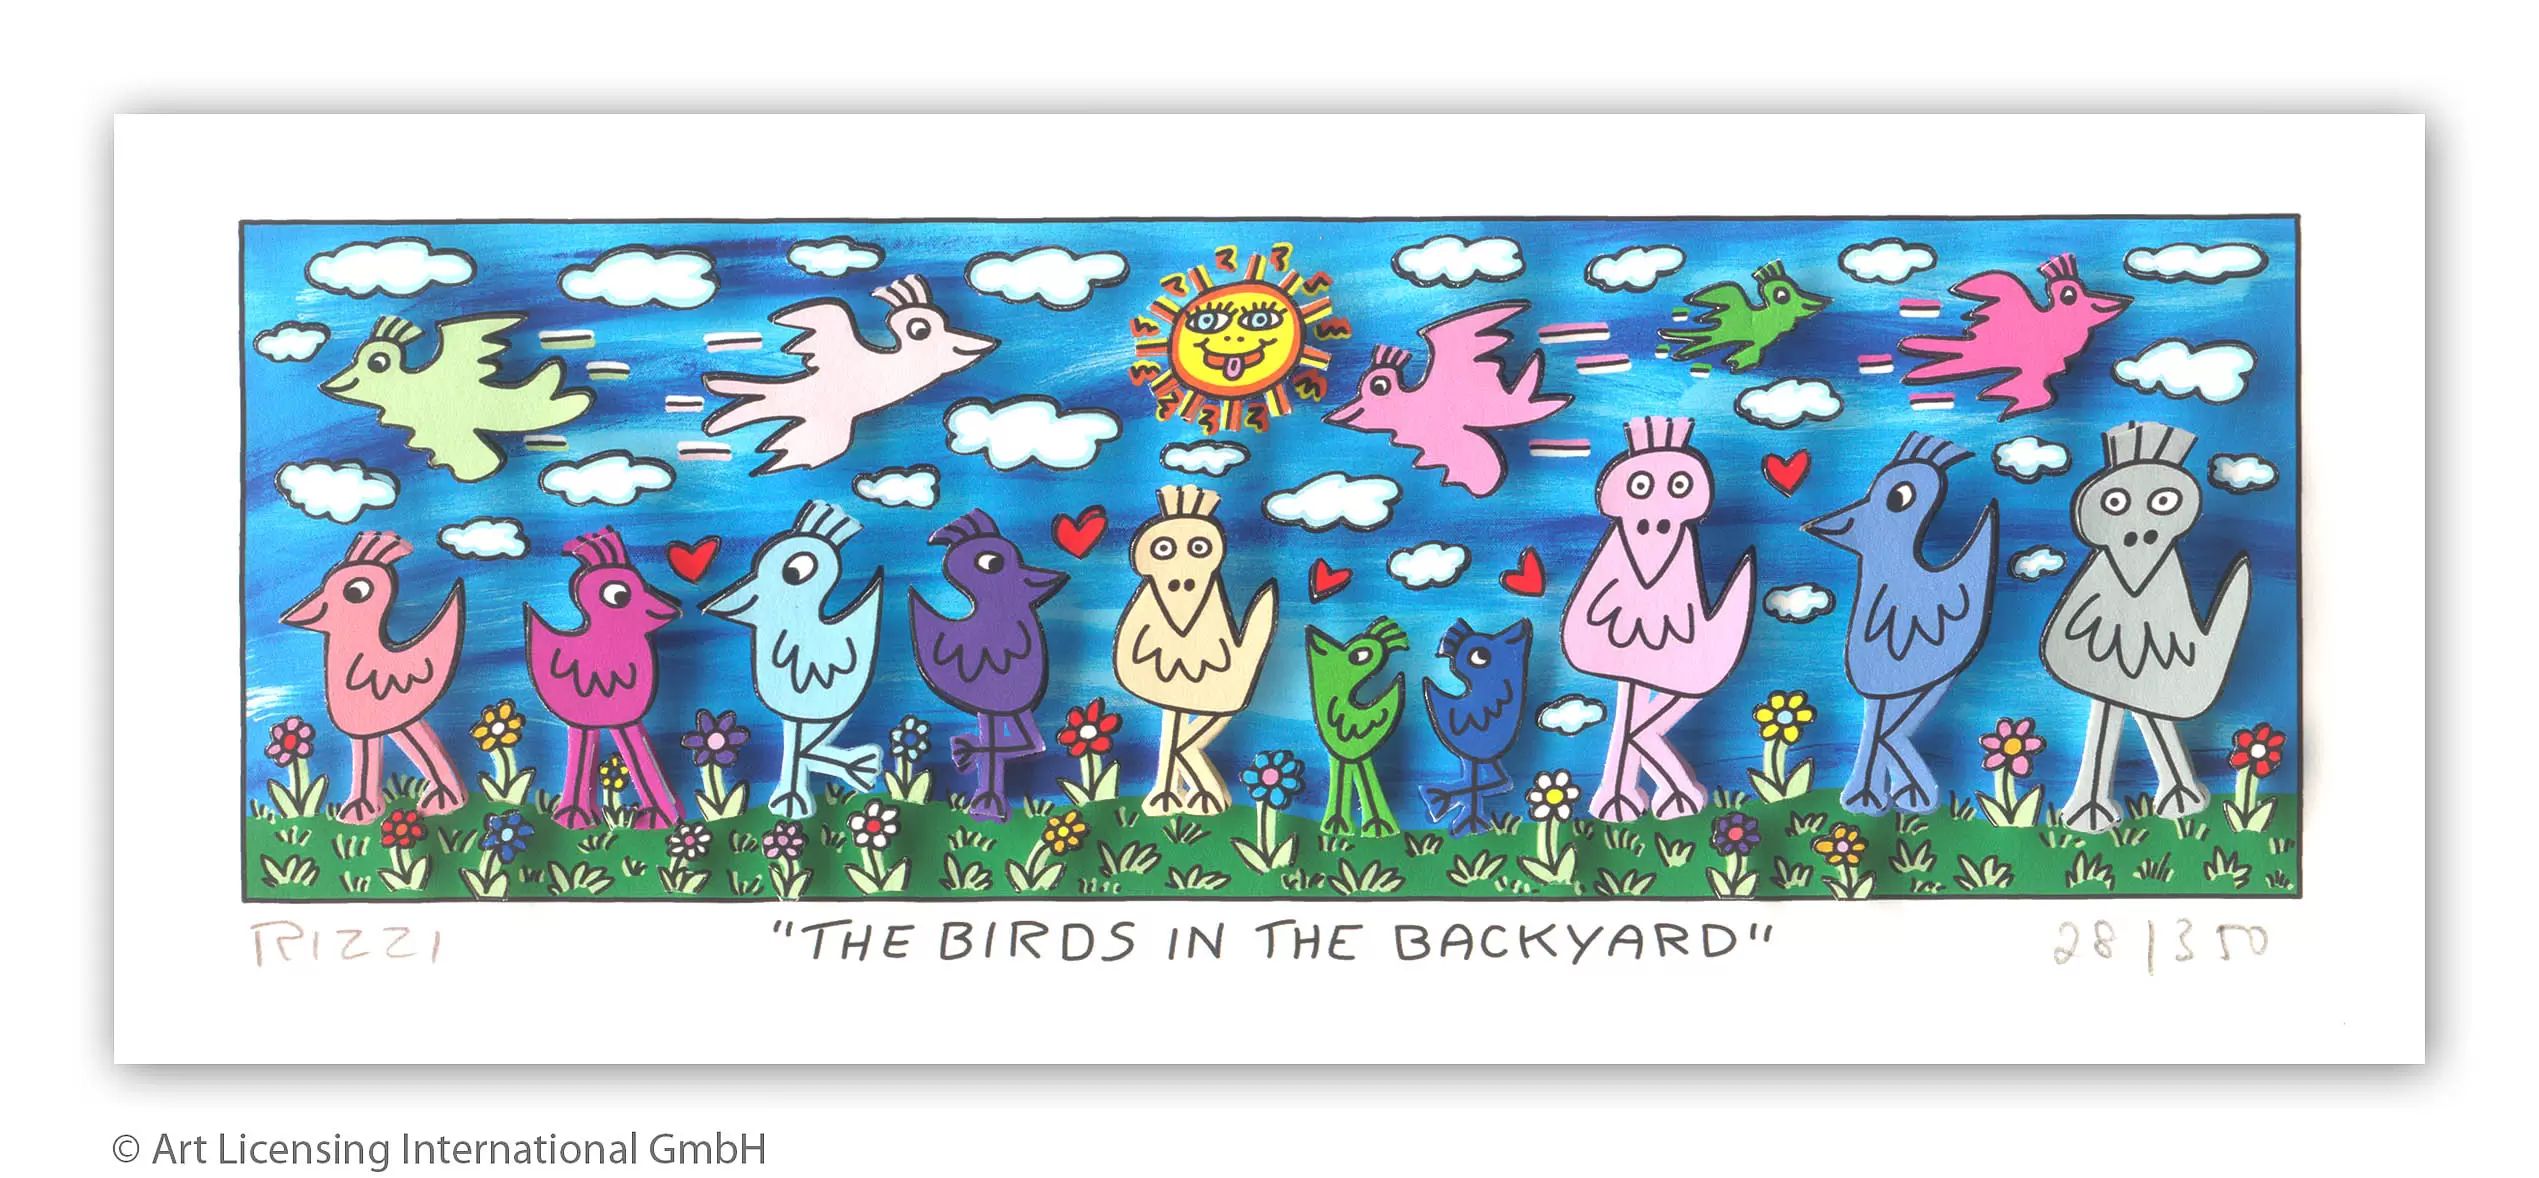 james-rizzi-the-birds-in-the-backyard-ungerahmt-kunst-3d